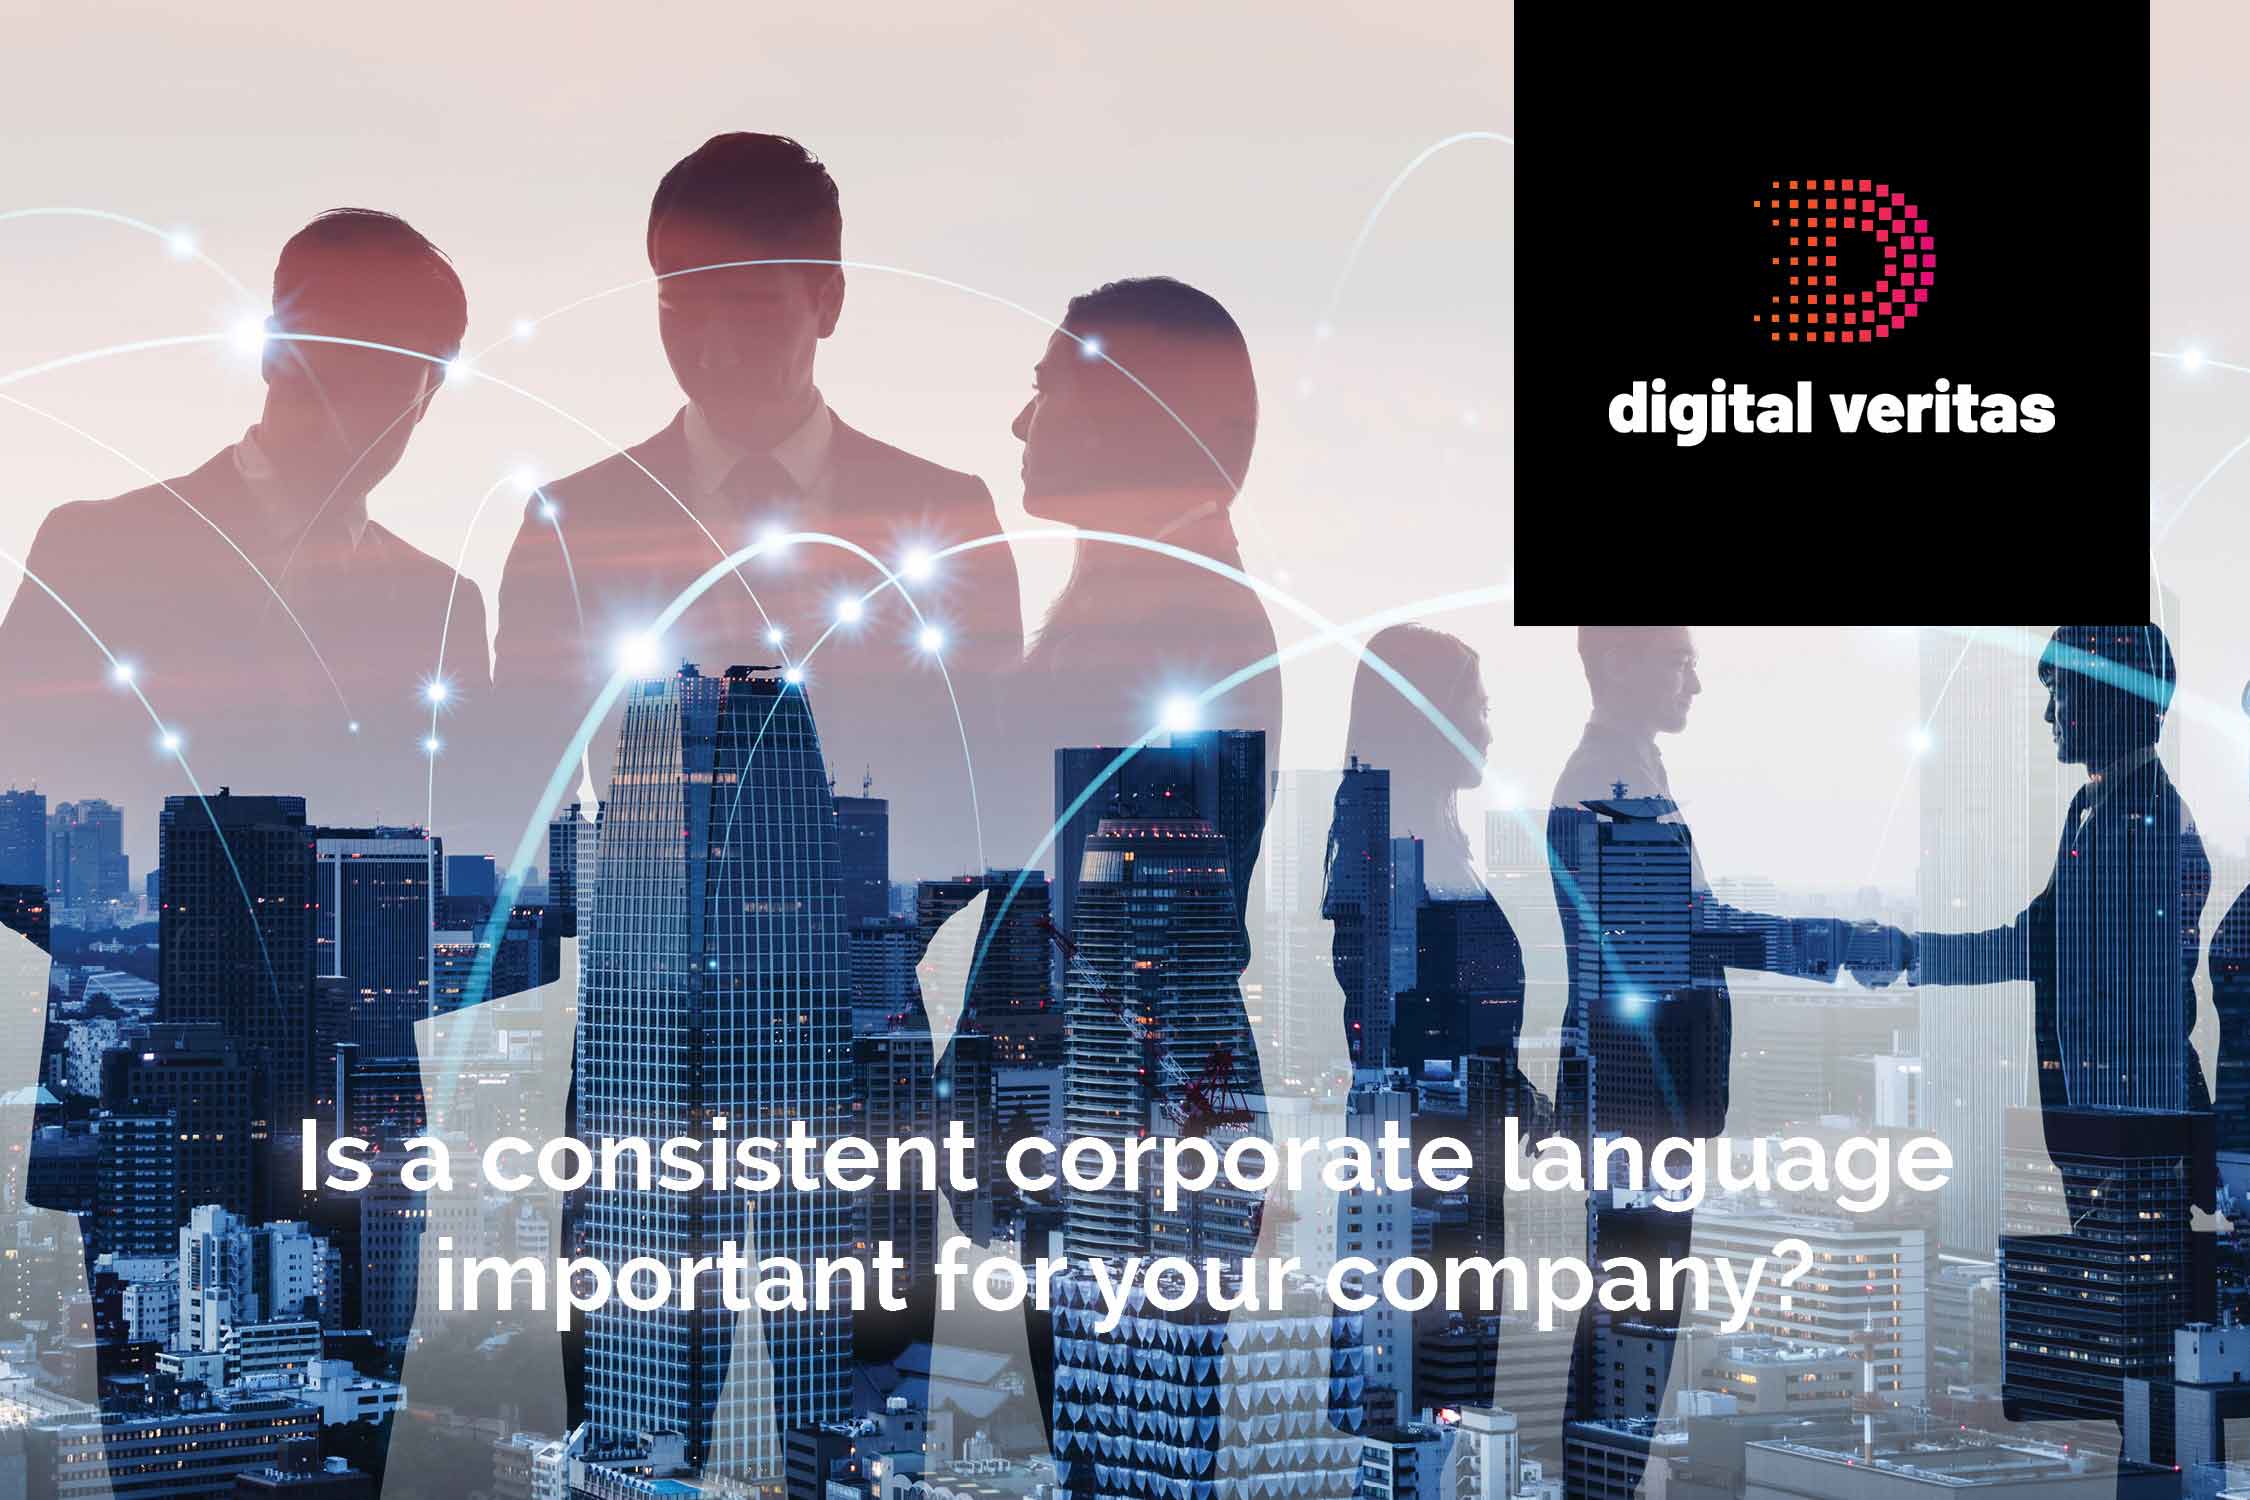 #digitalveritas #consistency #corporatelanguage